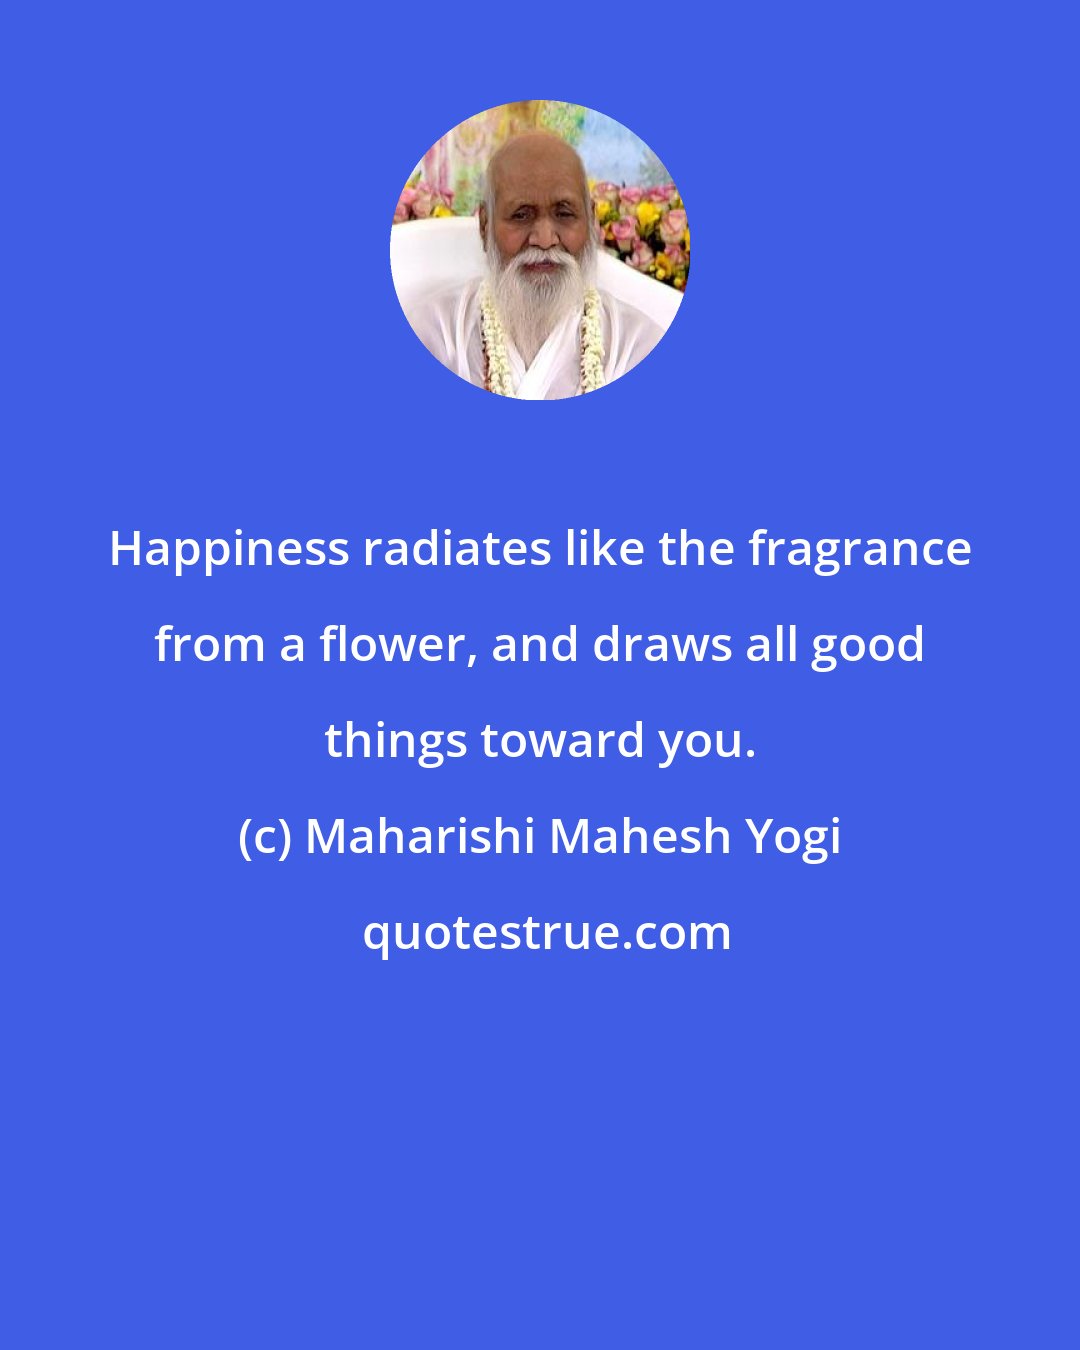 Maharishi Mahesh Yogi: Happiness radiates like the fragrance from a flower, and draws all good things toward you.